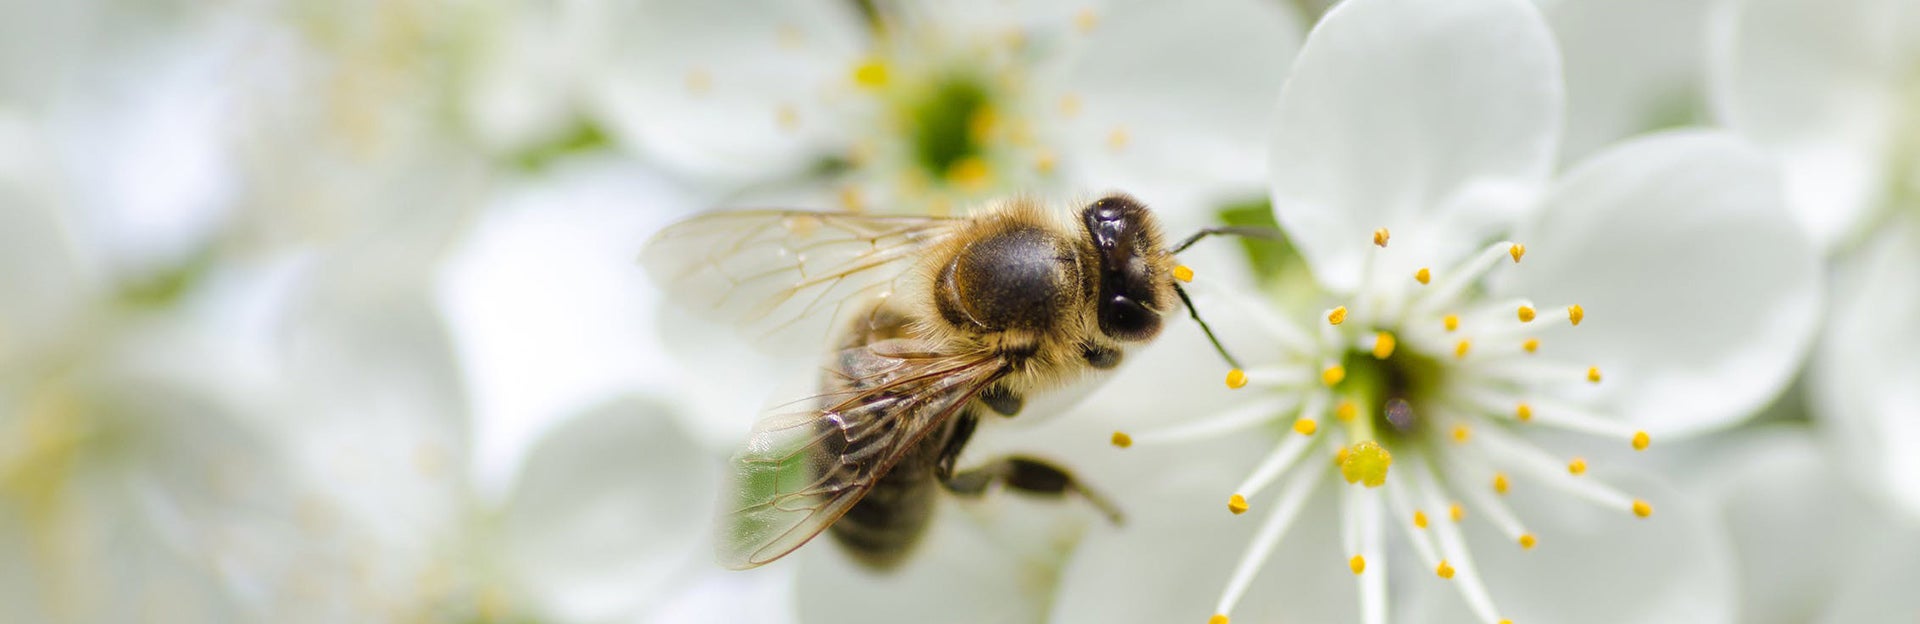 Bee on white blossom, source: pexel.com